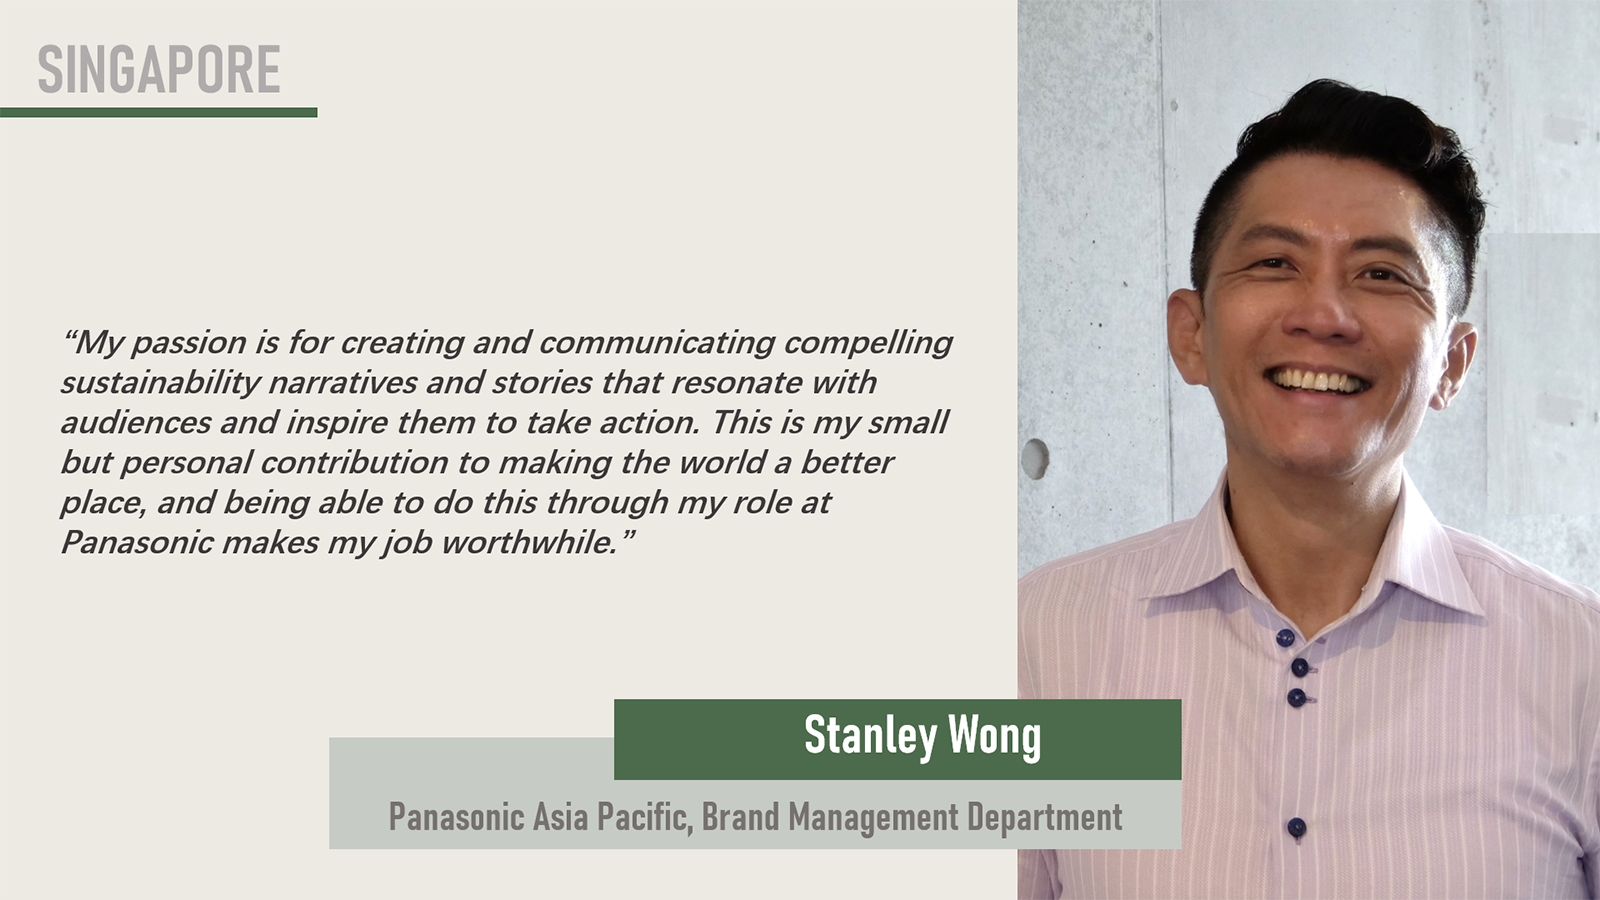 Photo: Stanley Wong, Panasonic Asia Pacific, Brand Management Department